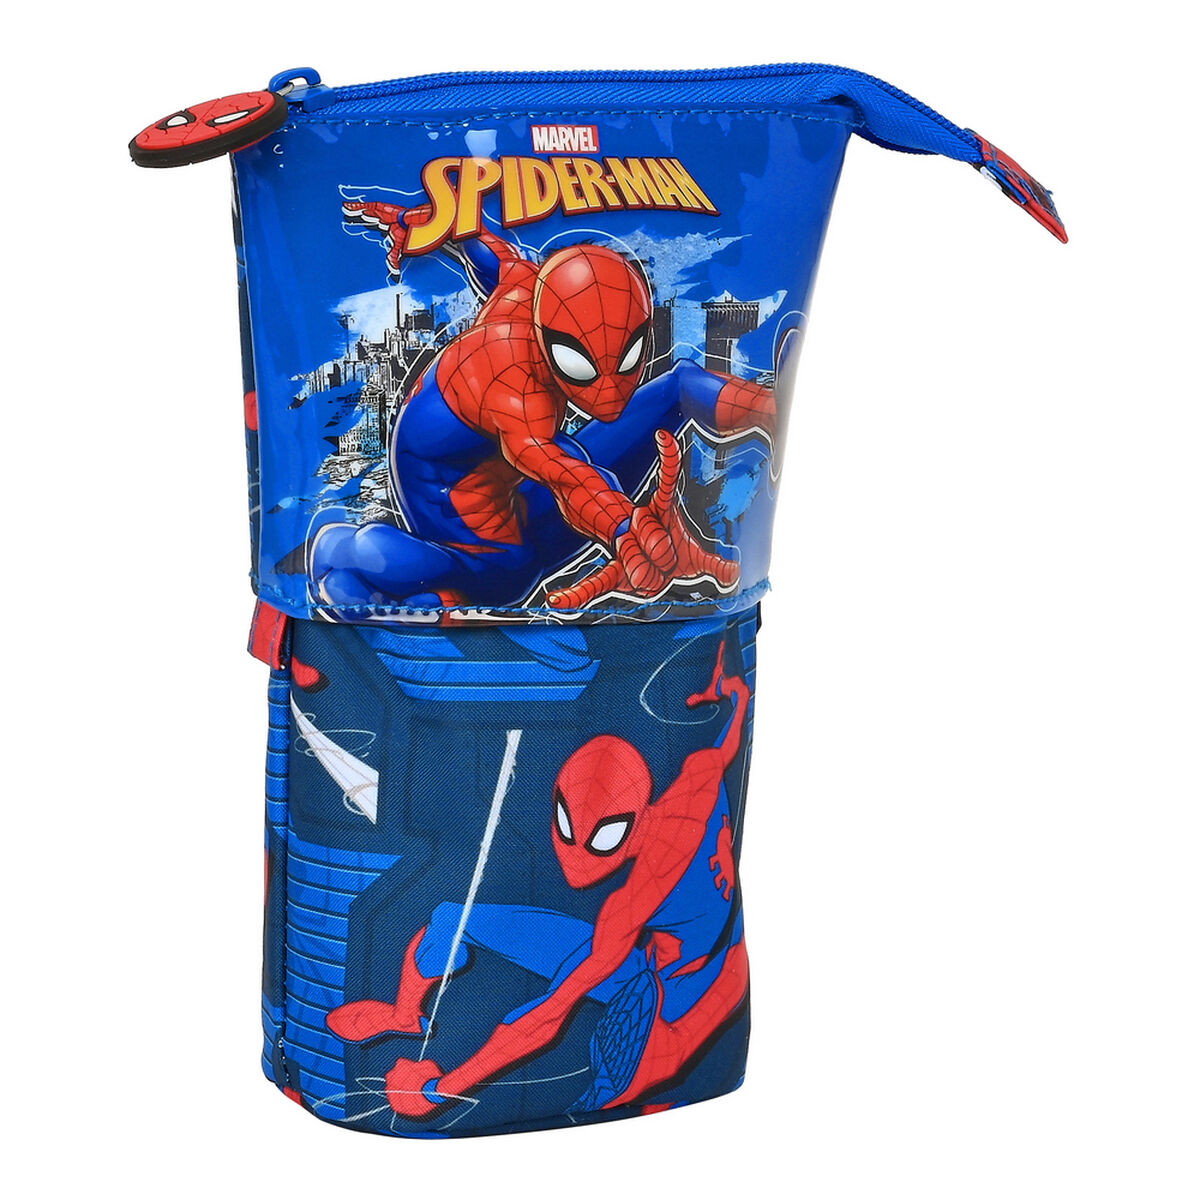 Pencil Holder Case Spider-Man Great power Blue Red 8 x 19 x 6 cm